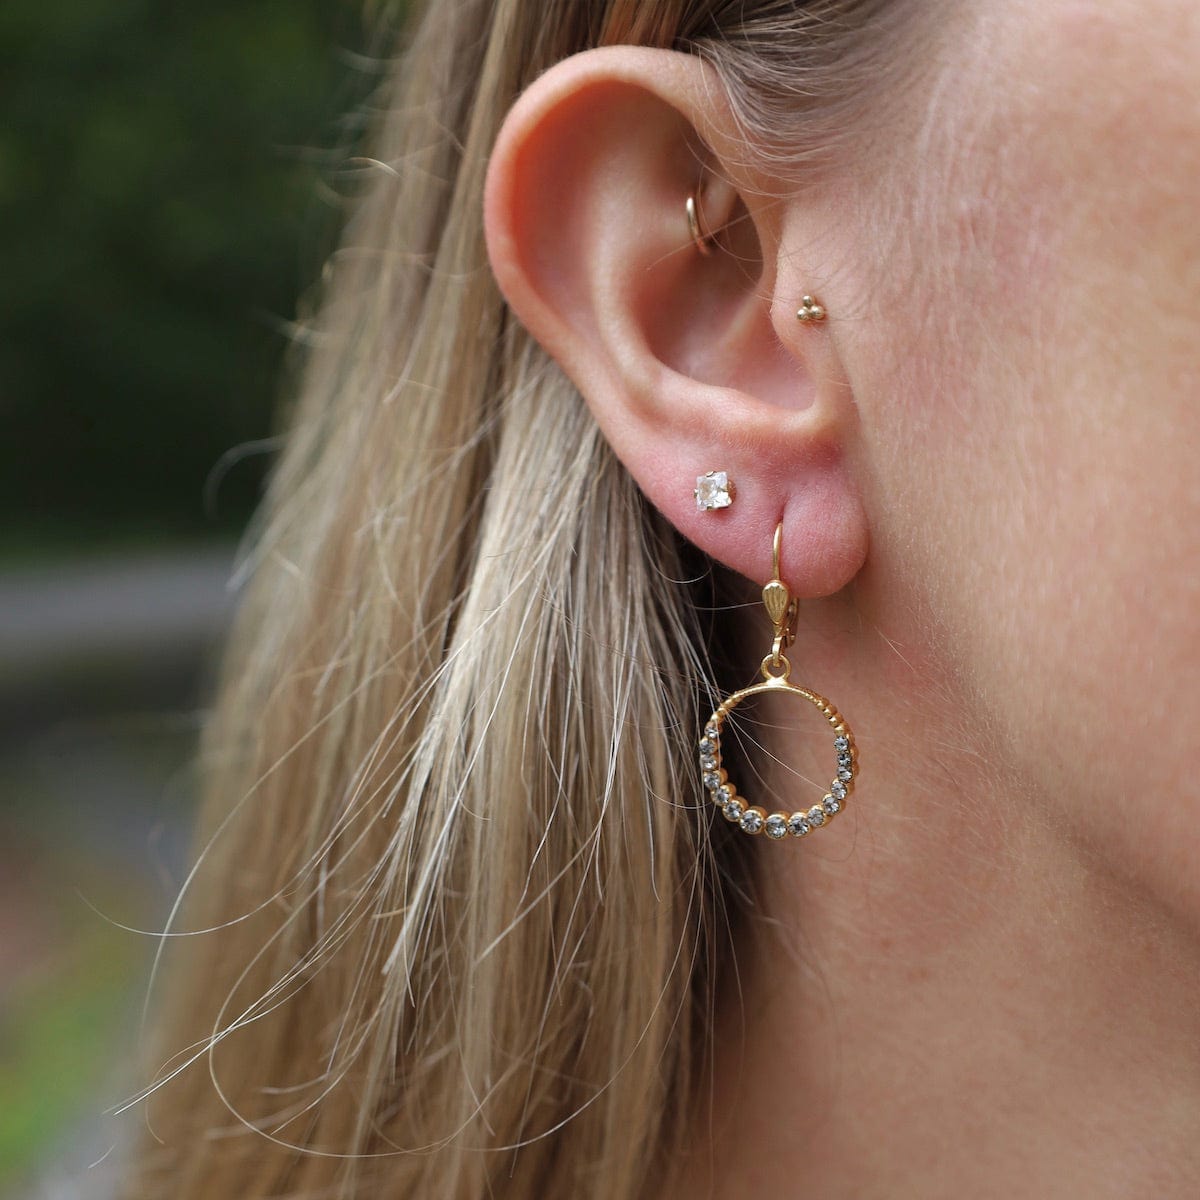 EAR-JM Gold Small Circle Earrings - Black Diamond Crystal